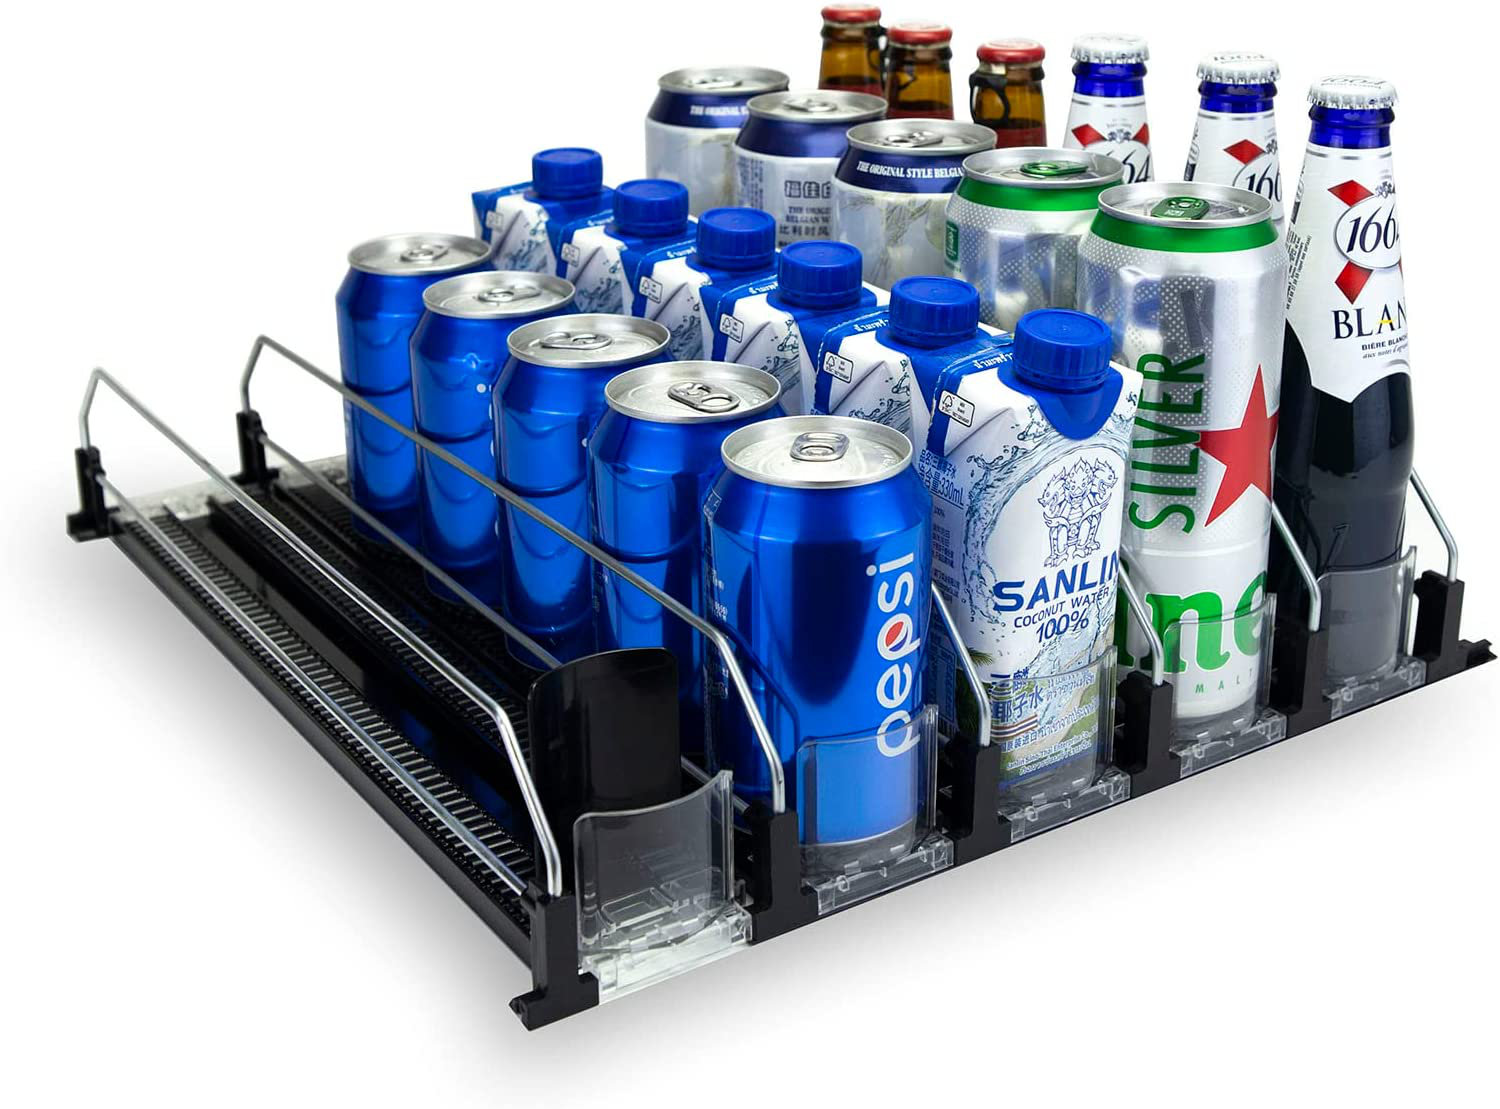 4pcs Adjustable Beverage Can Organizer For Refrigerator, Plastic